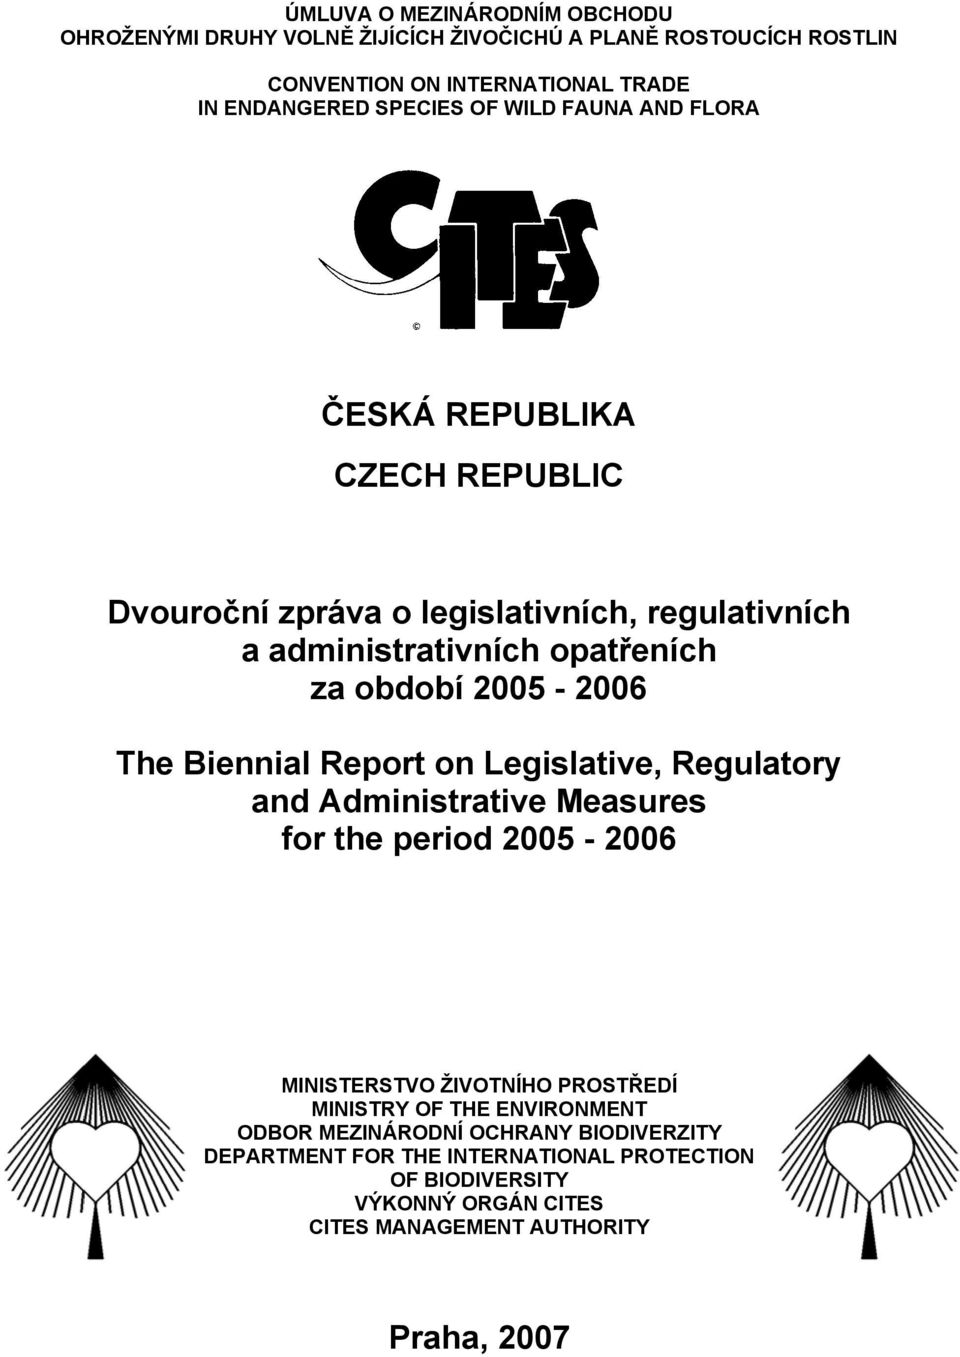 The Biennial Report on Legislative, Regulatory and Administrative Measures for the period 2005-2006 MIISTERSTVO ŽIVOTÍHO PROSTŘEDÍ MIISTR OF THE